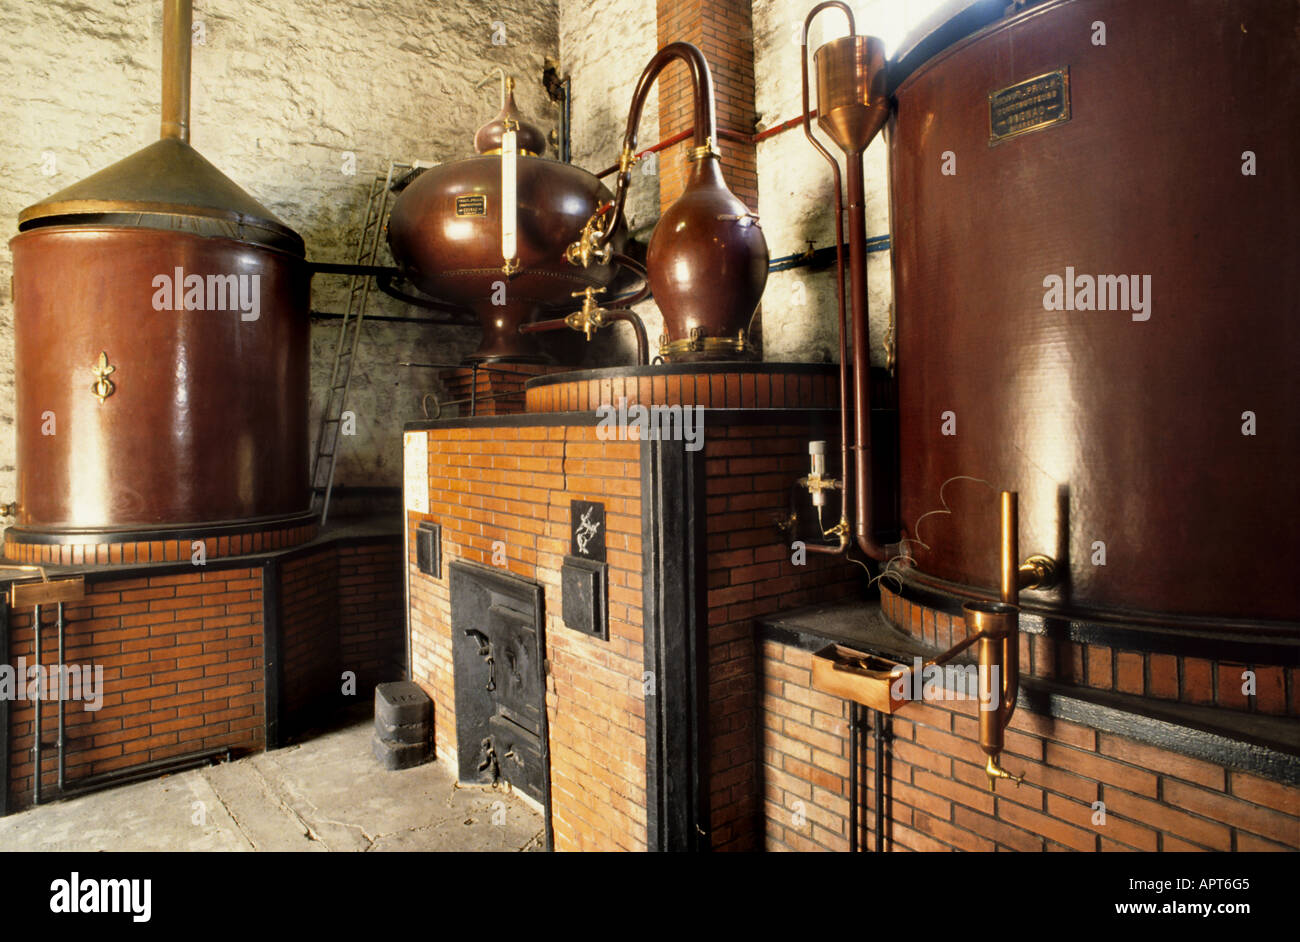 France Cognac Distillery Cellar Cask Barrel Stock Photo - Alamy